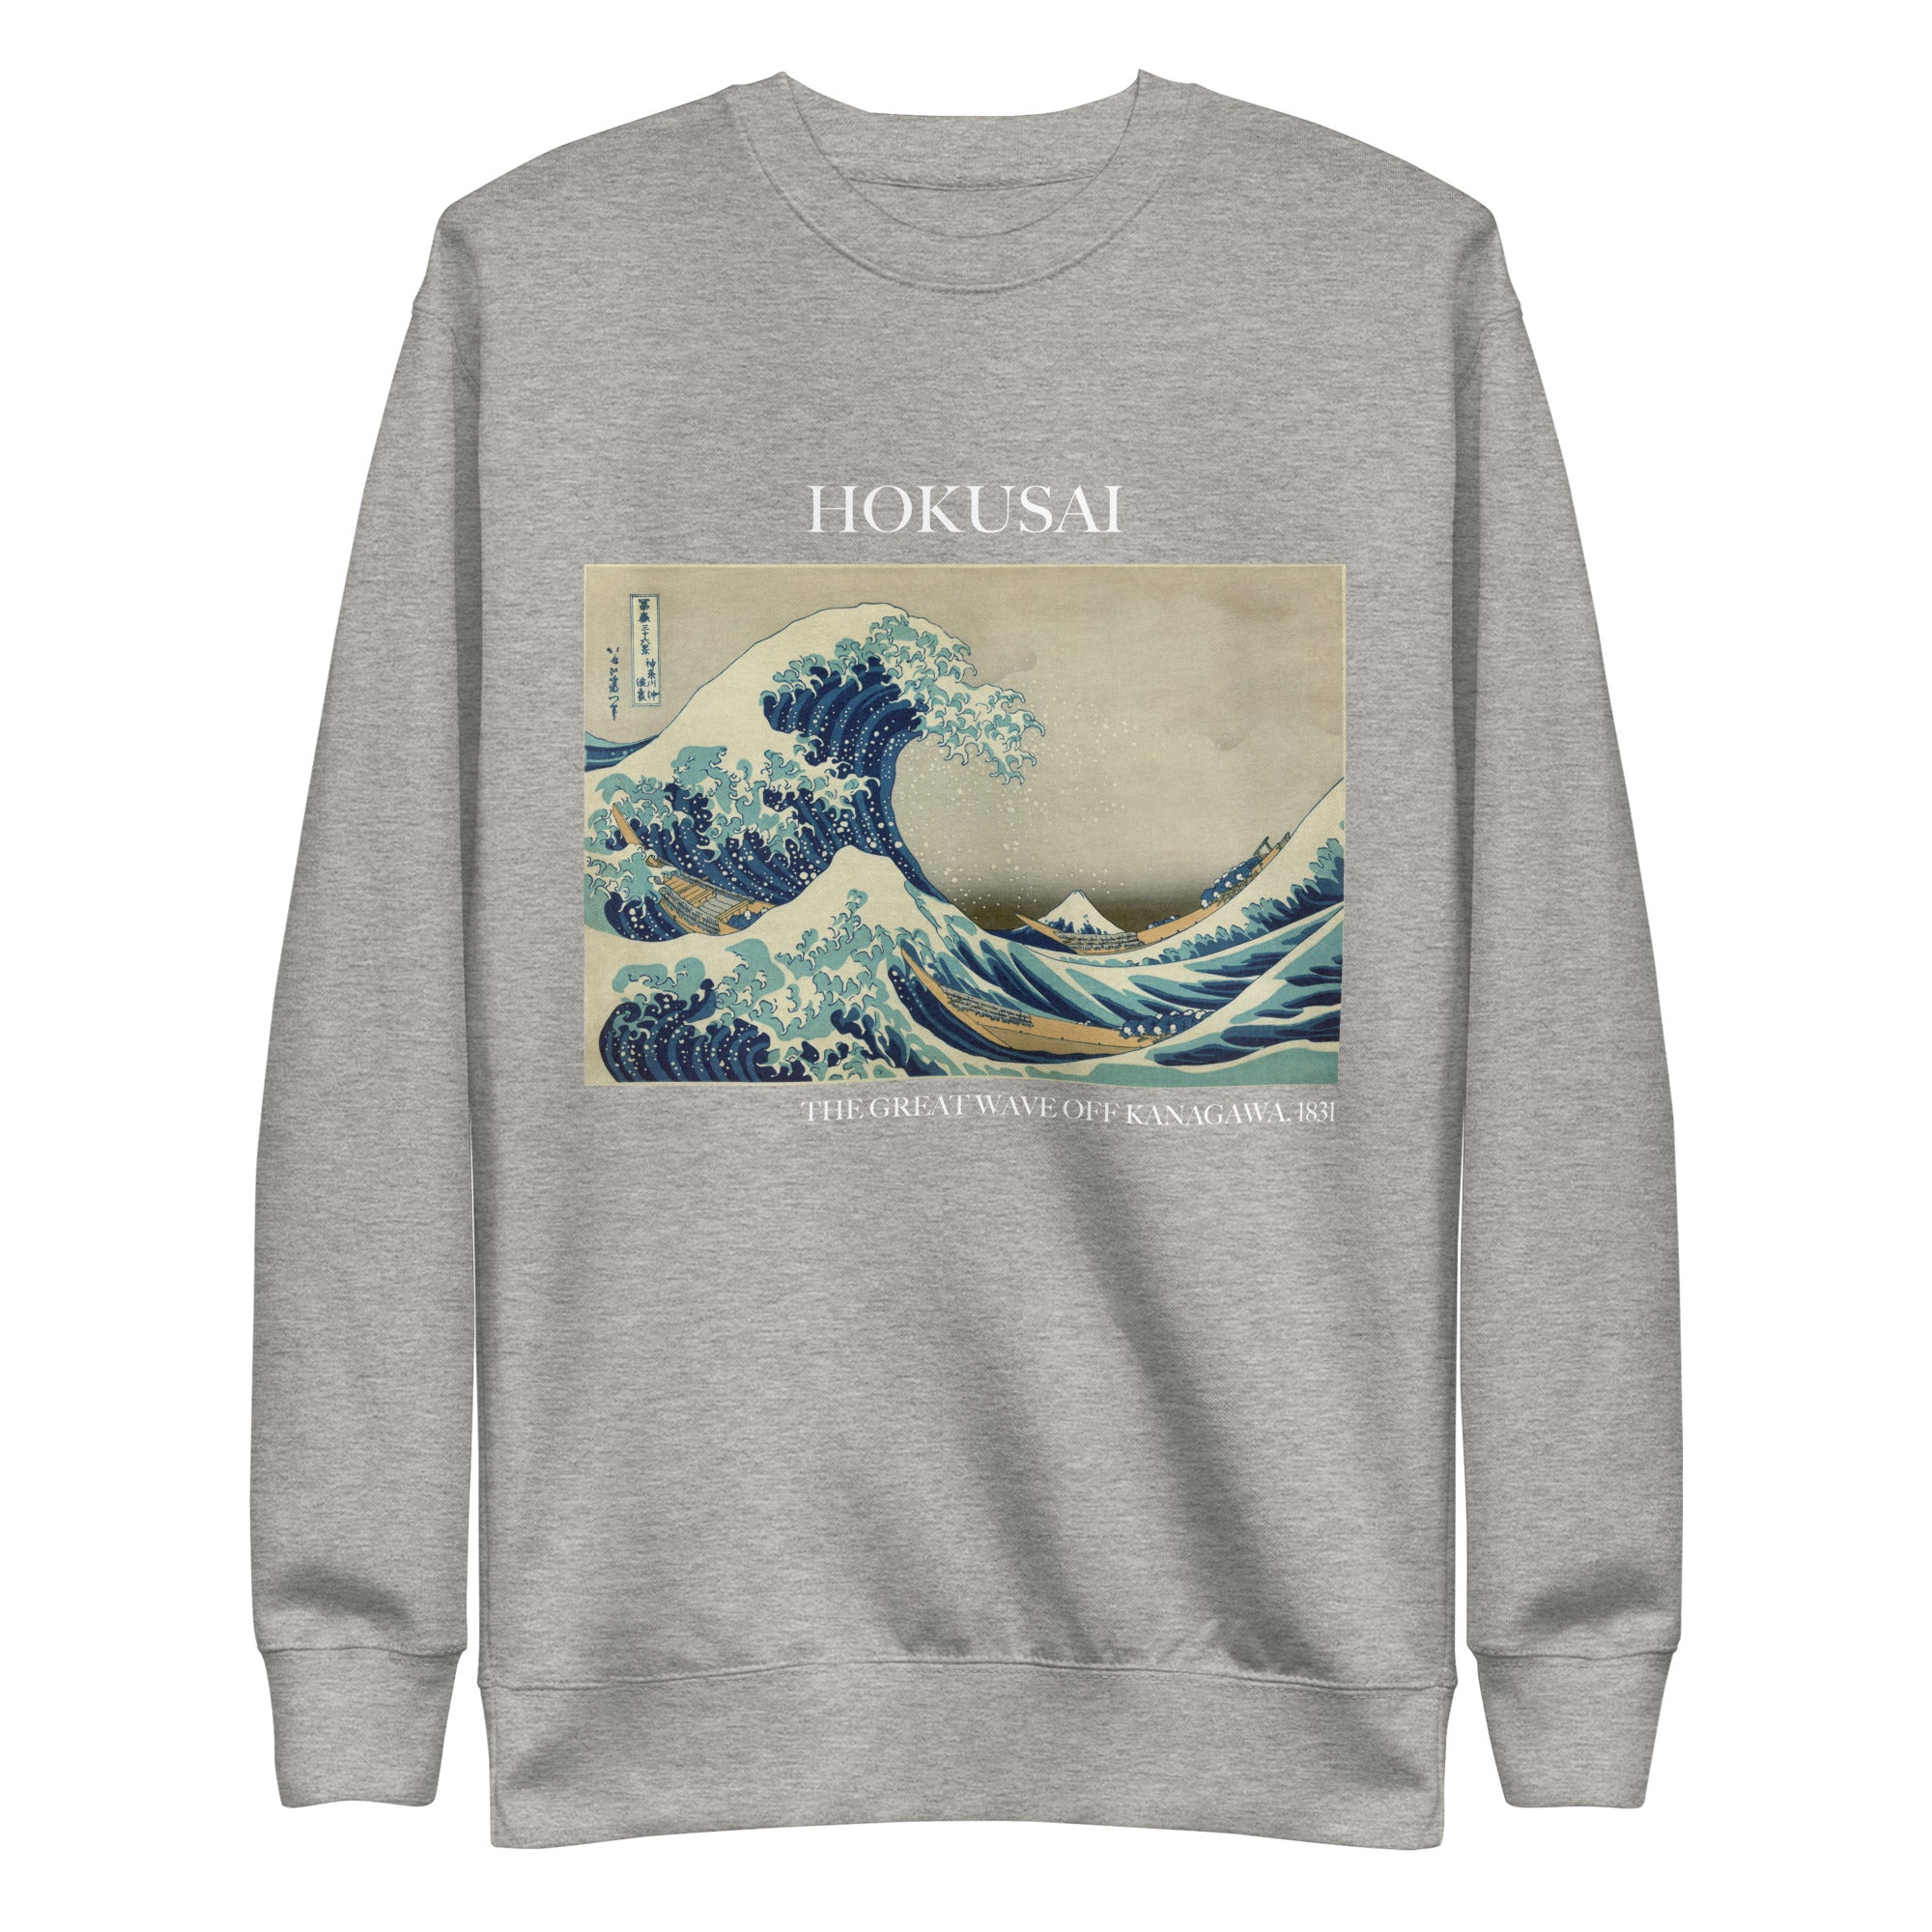 Hokusai 'The Great Wave off Kanagawa' Famous Painting Sweatshirt | Unisex Premium Sweatshirt